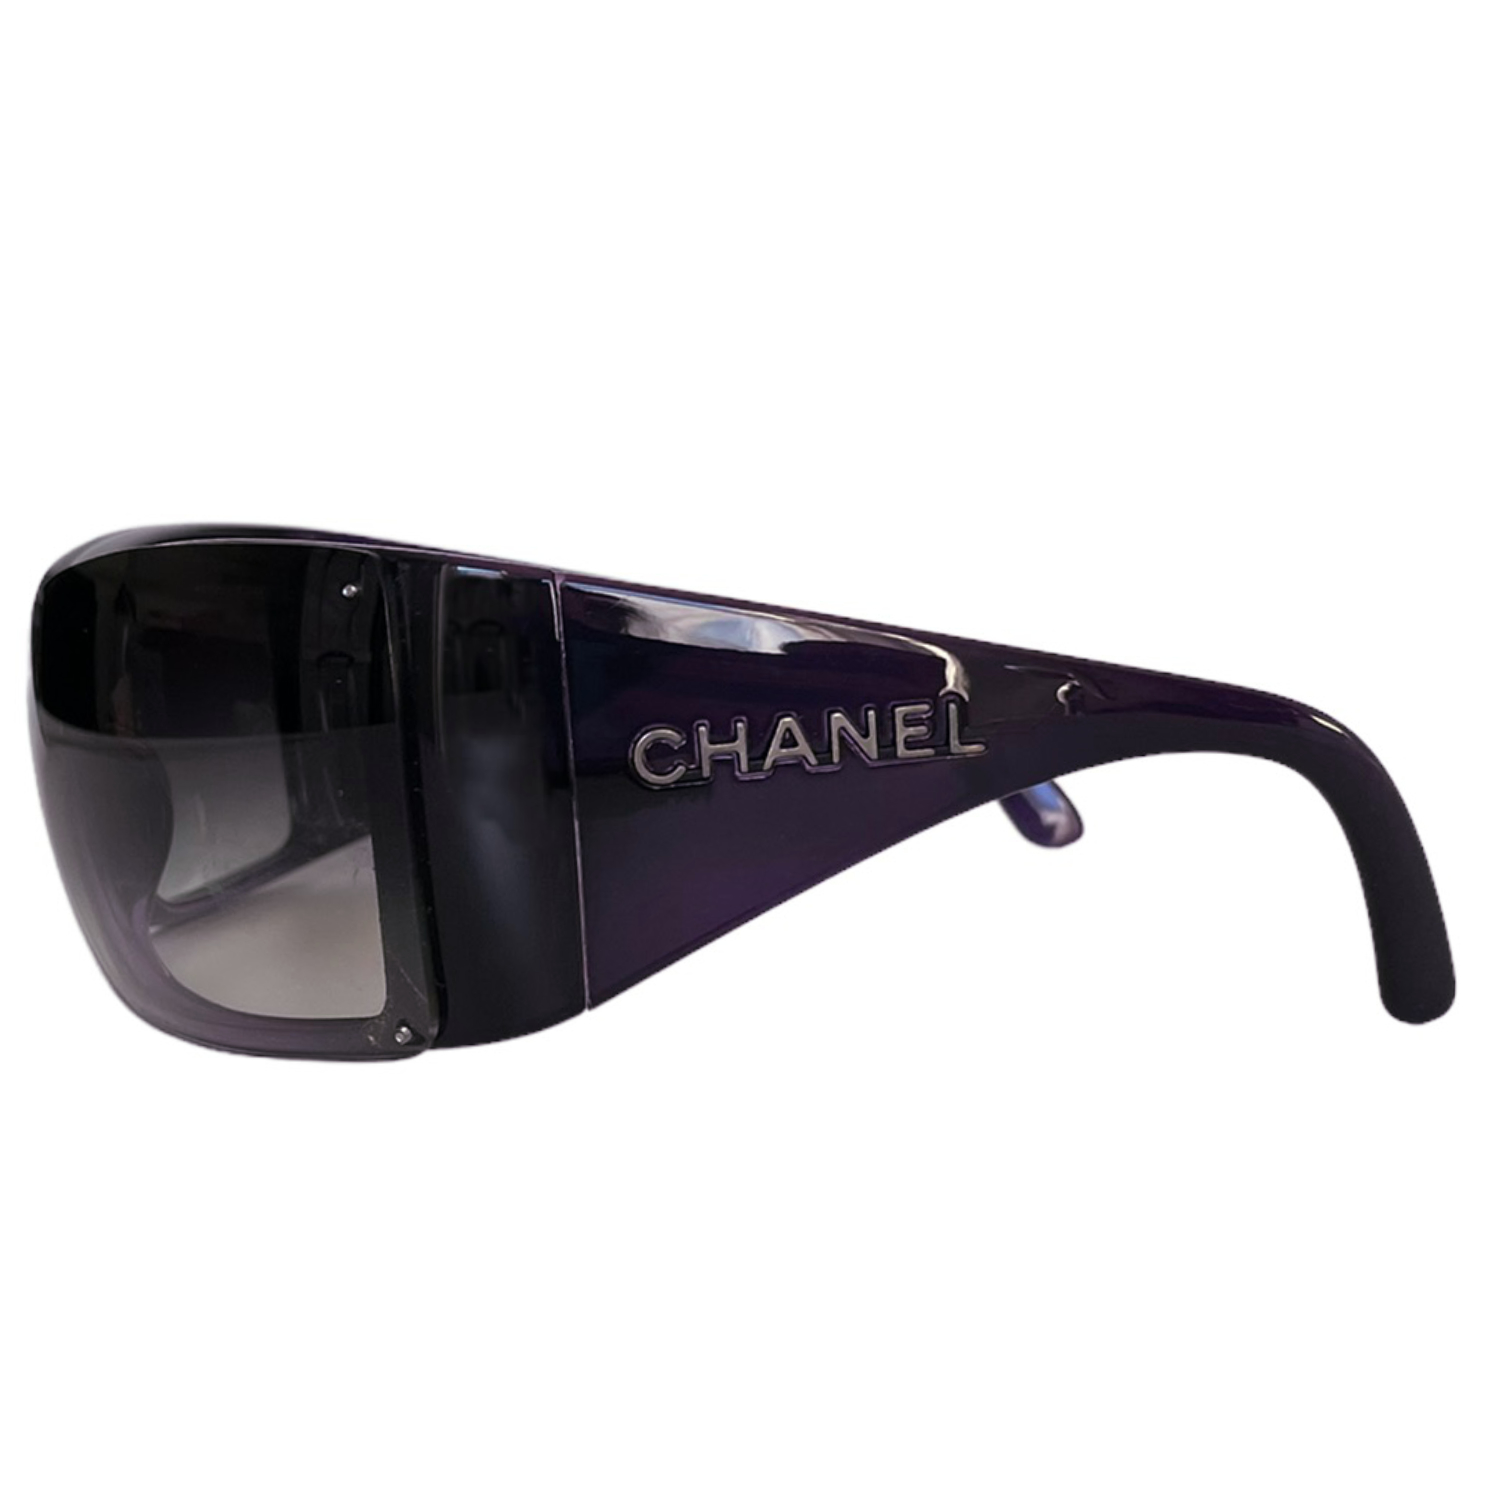 Chanel Spellout Wraparound Sunglasses in Purple – Nitryl